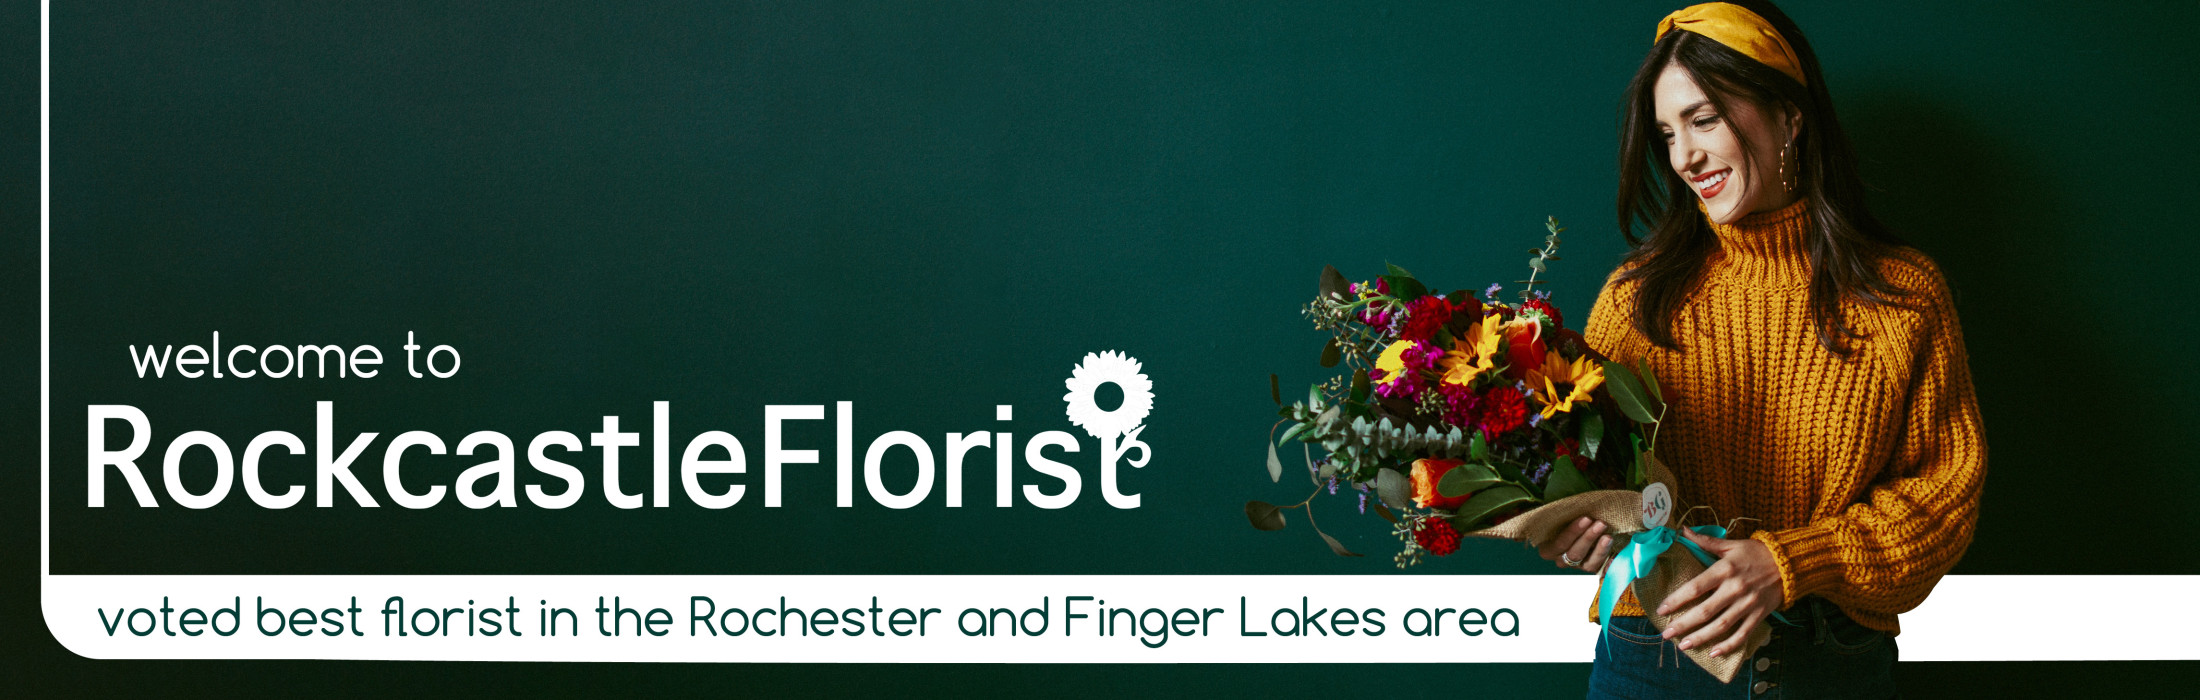 Rockcastle Florist, Rochester NY Florist, Canandaigua Flower Shop